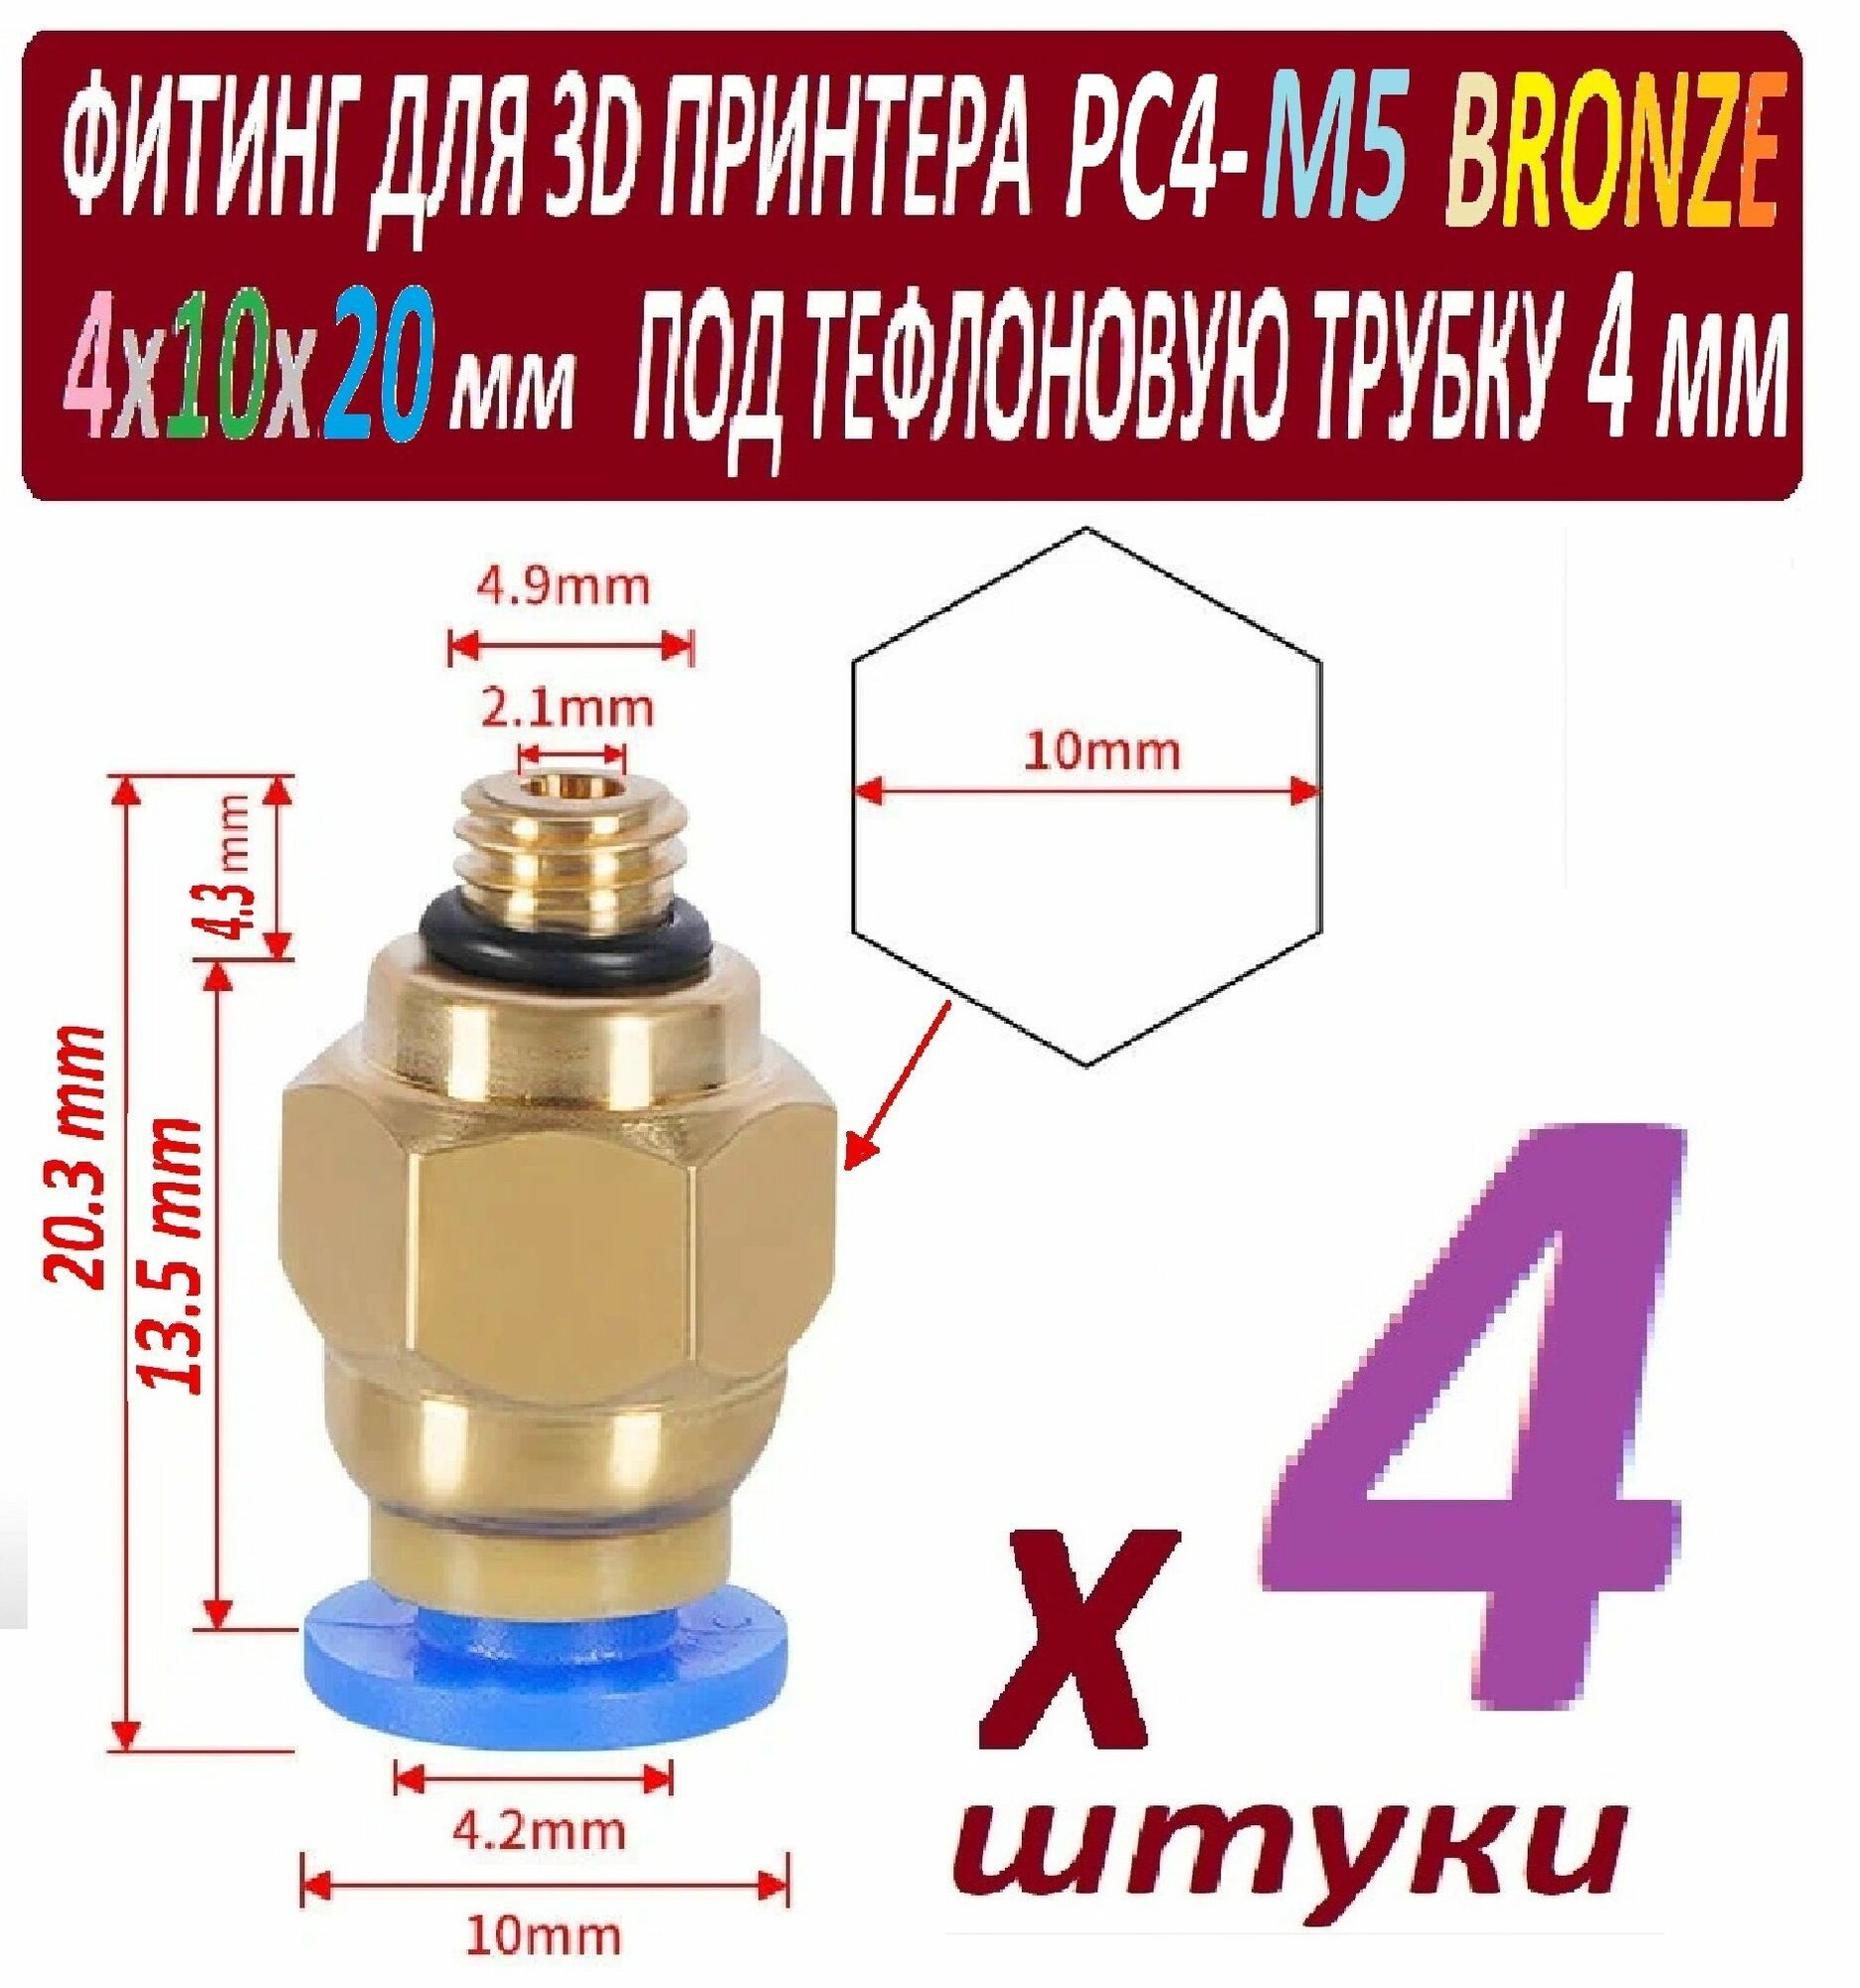 Фитинги PC4-M5 Bronze для 3D принтера под тефлоновую трубку 2х4 мм - 4 штуки